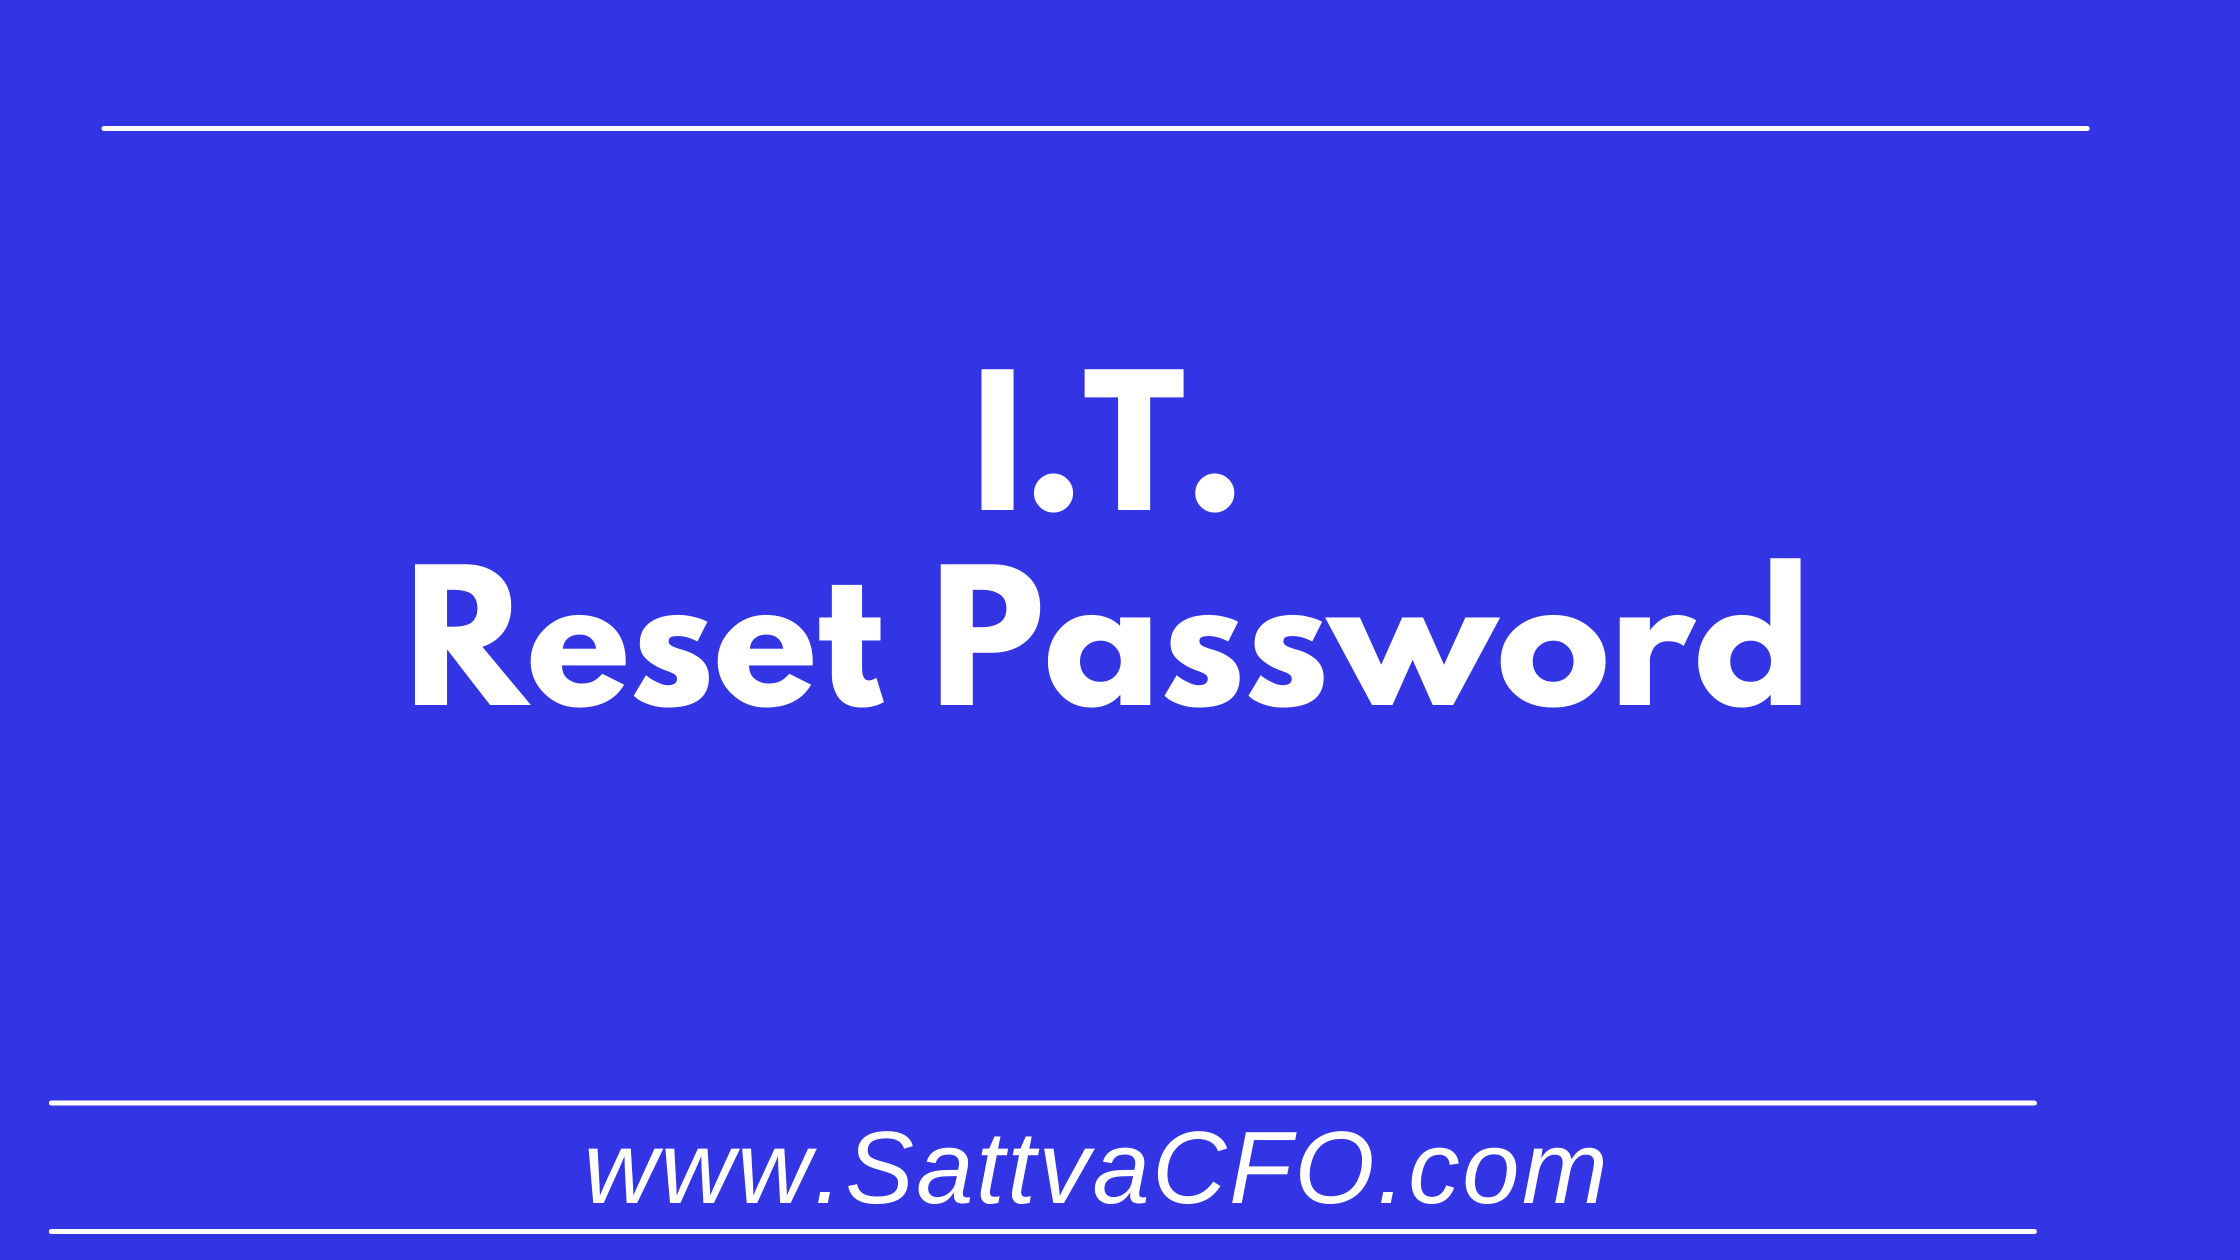 Reset password IT portal